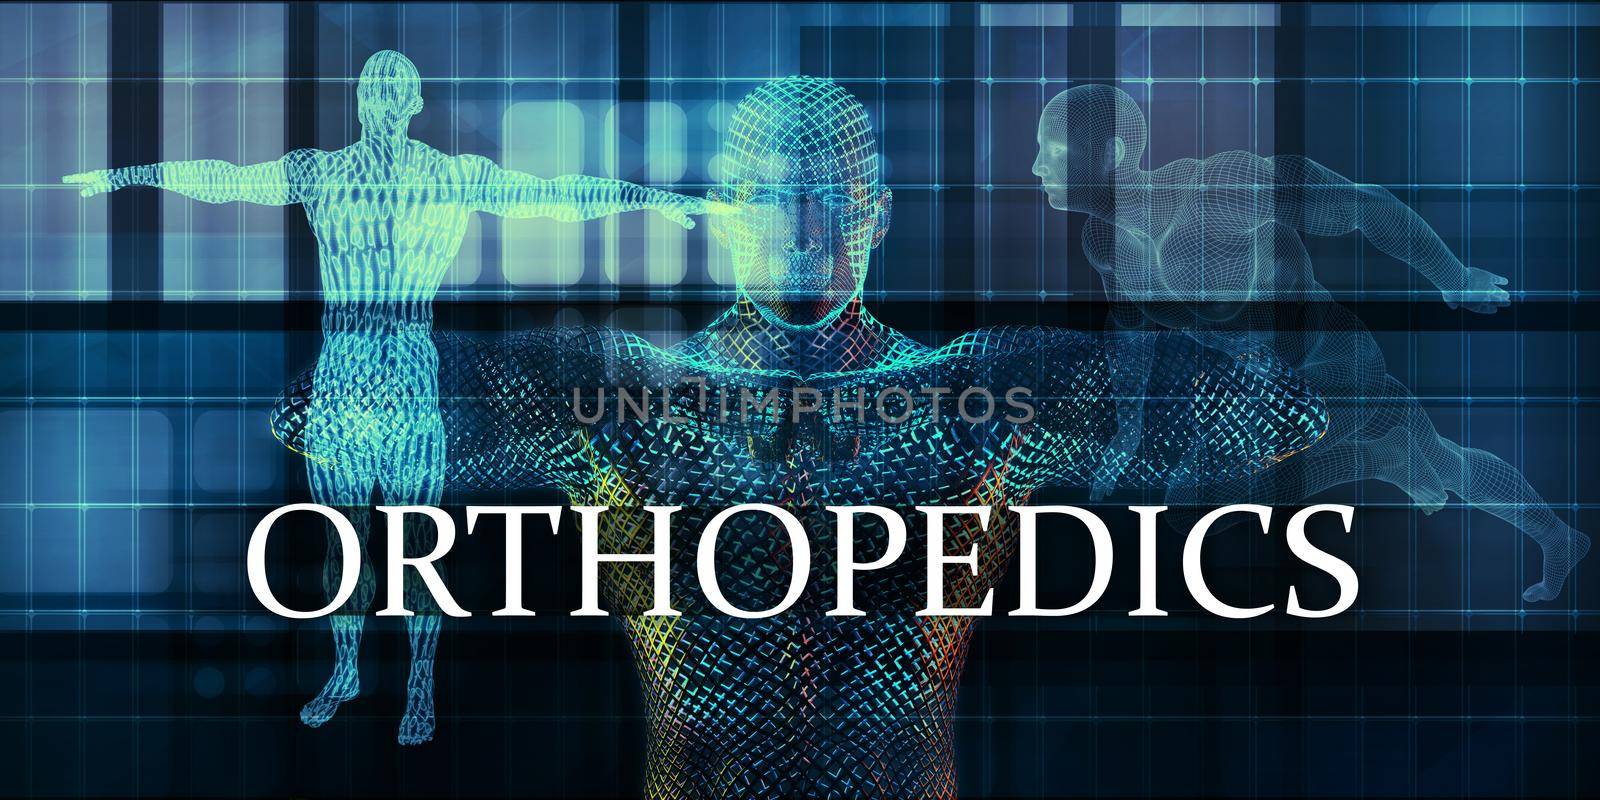 Orthopedics by kentoh